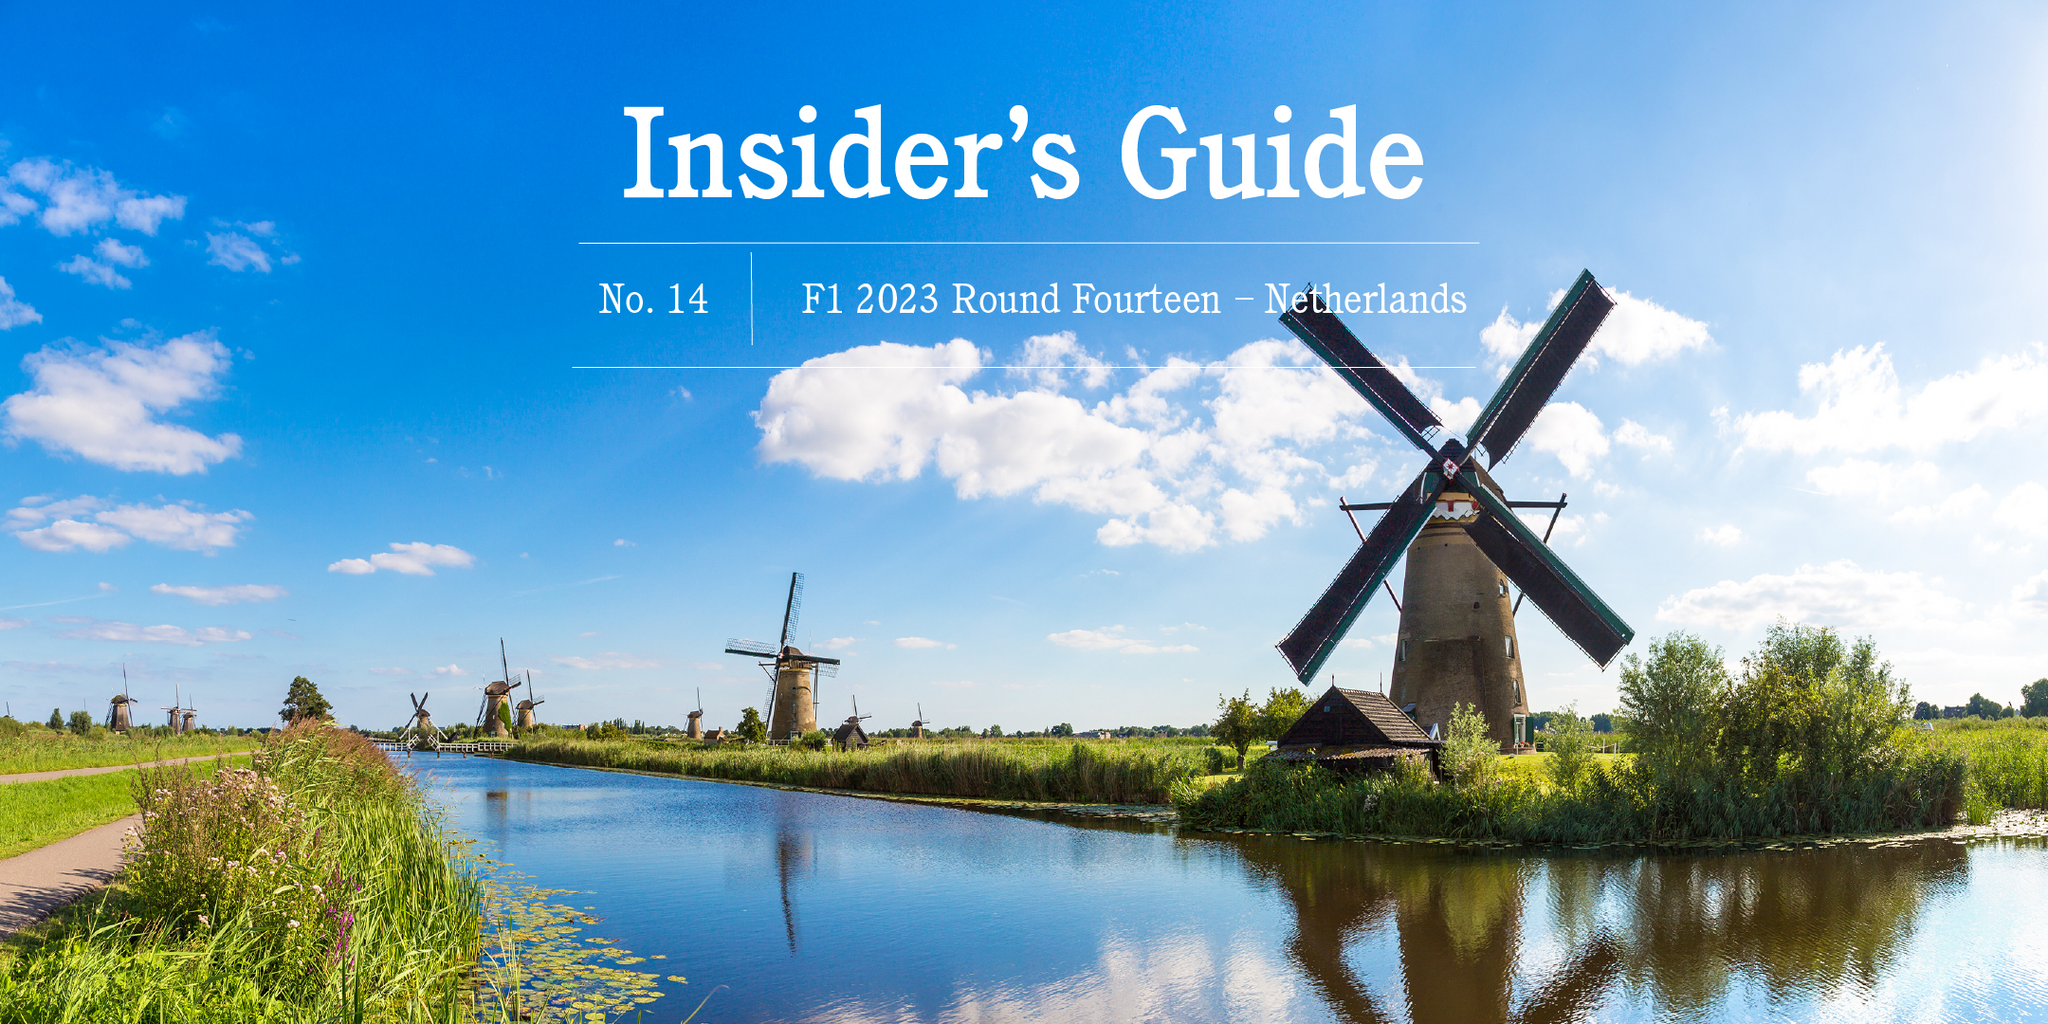 F1 2023 Insider's Guide No. 14 – Netherlands